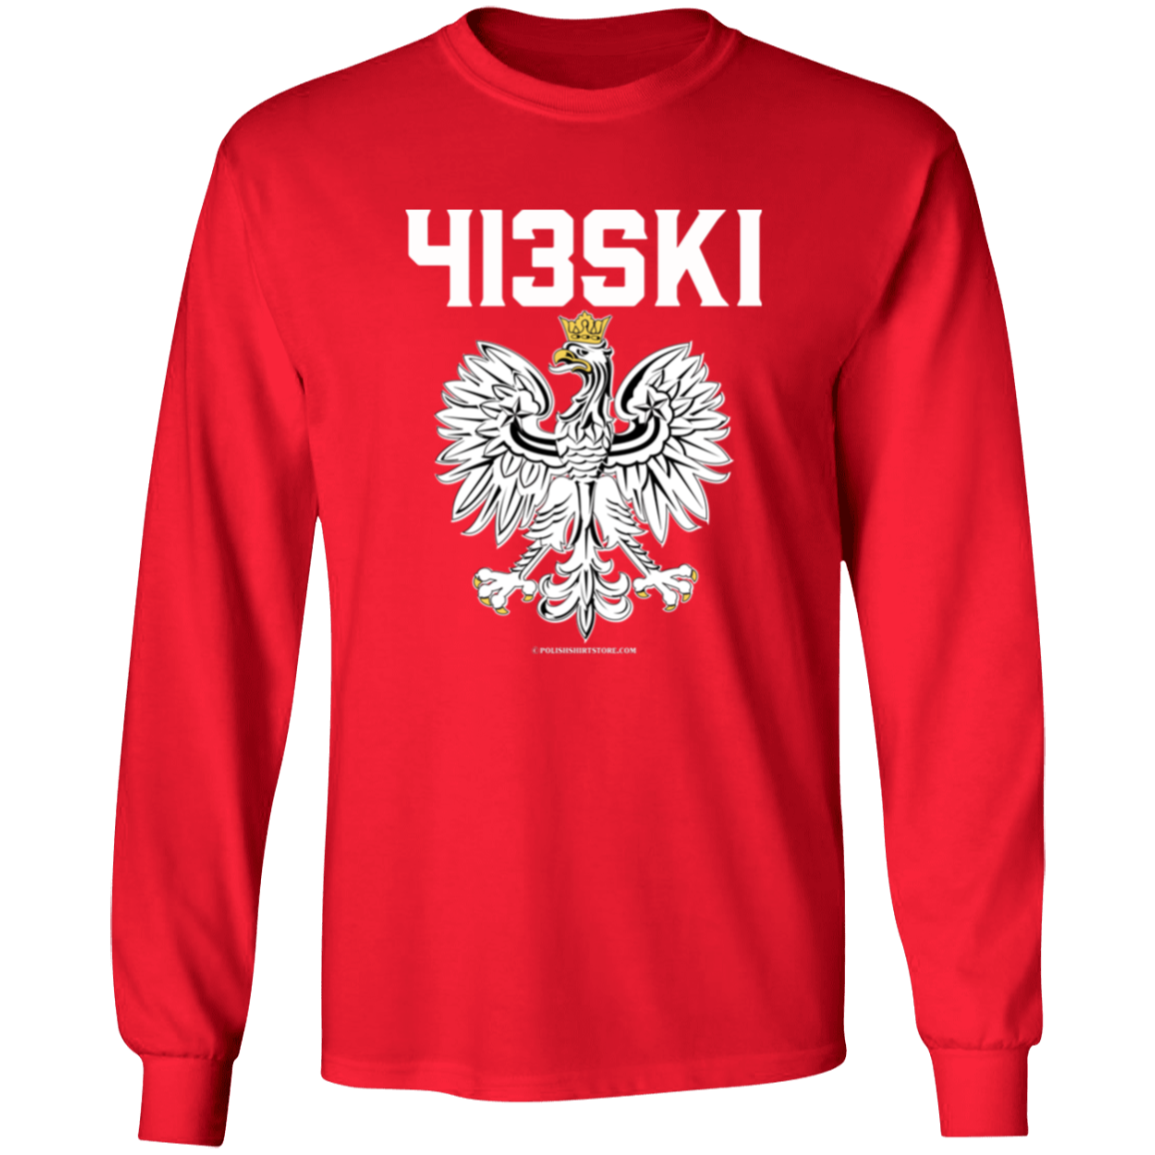 413SKI Apparel CustomCat G240 LS Ultra Cotton T-Shirt Red S